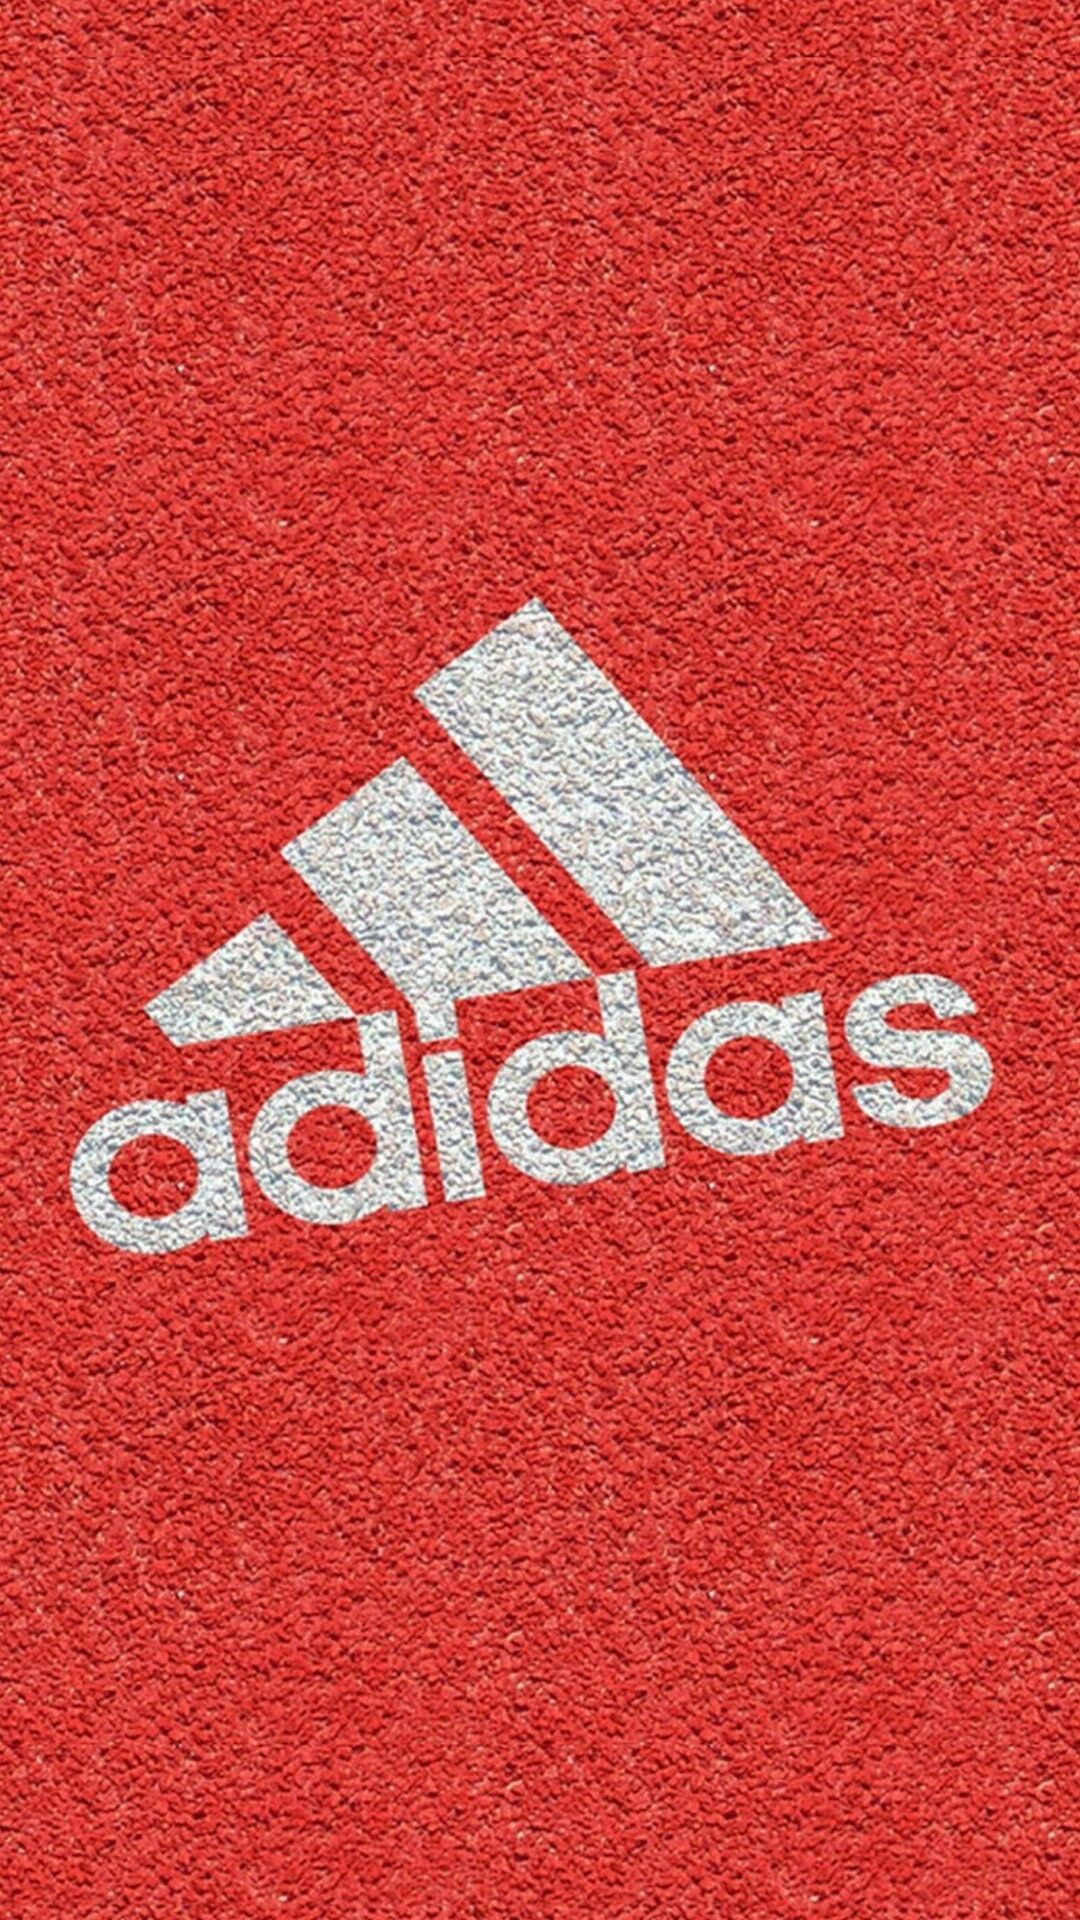 Adidas Iphone Hd Wallpapers On Wallpaperdog